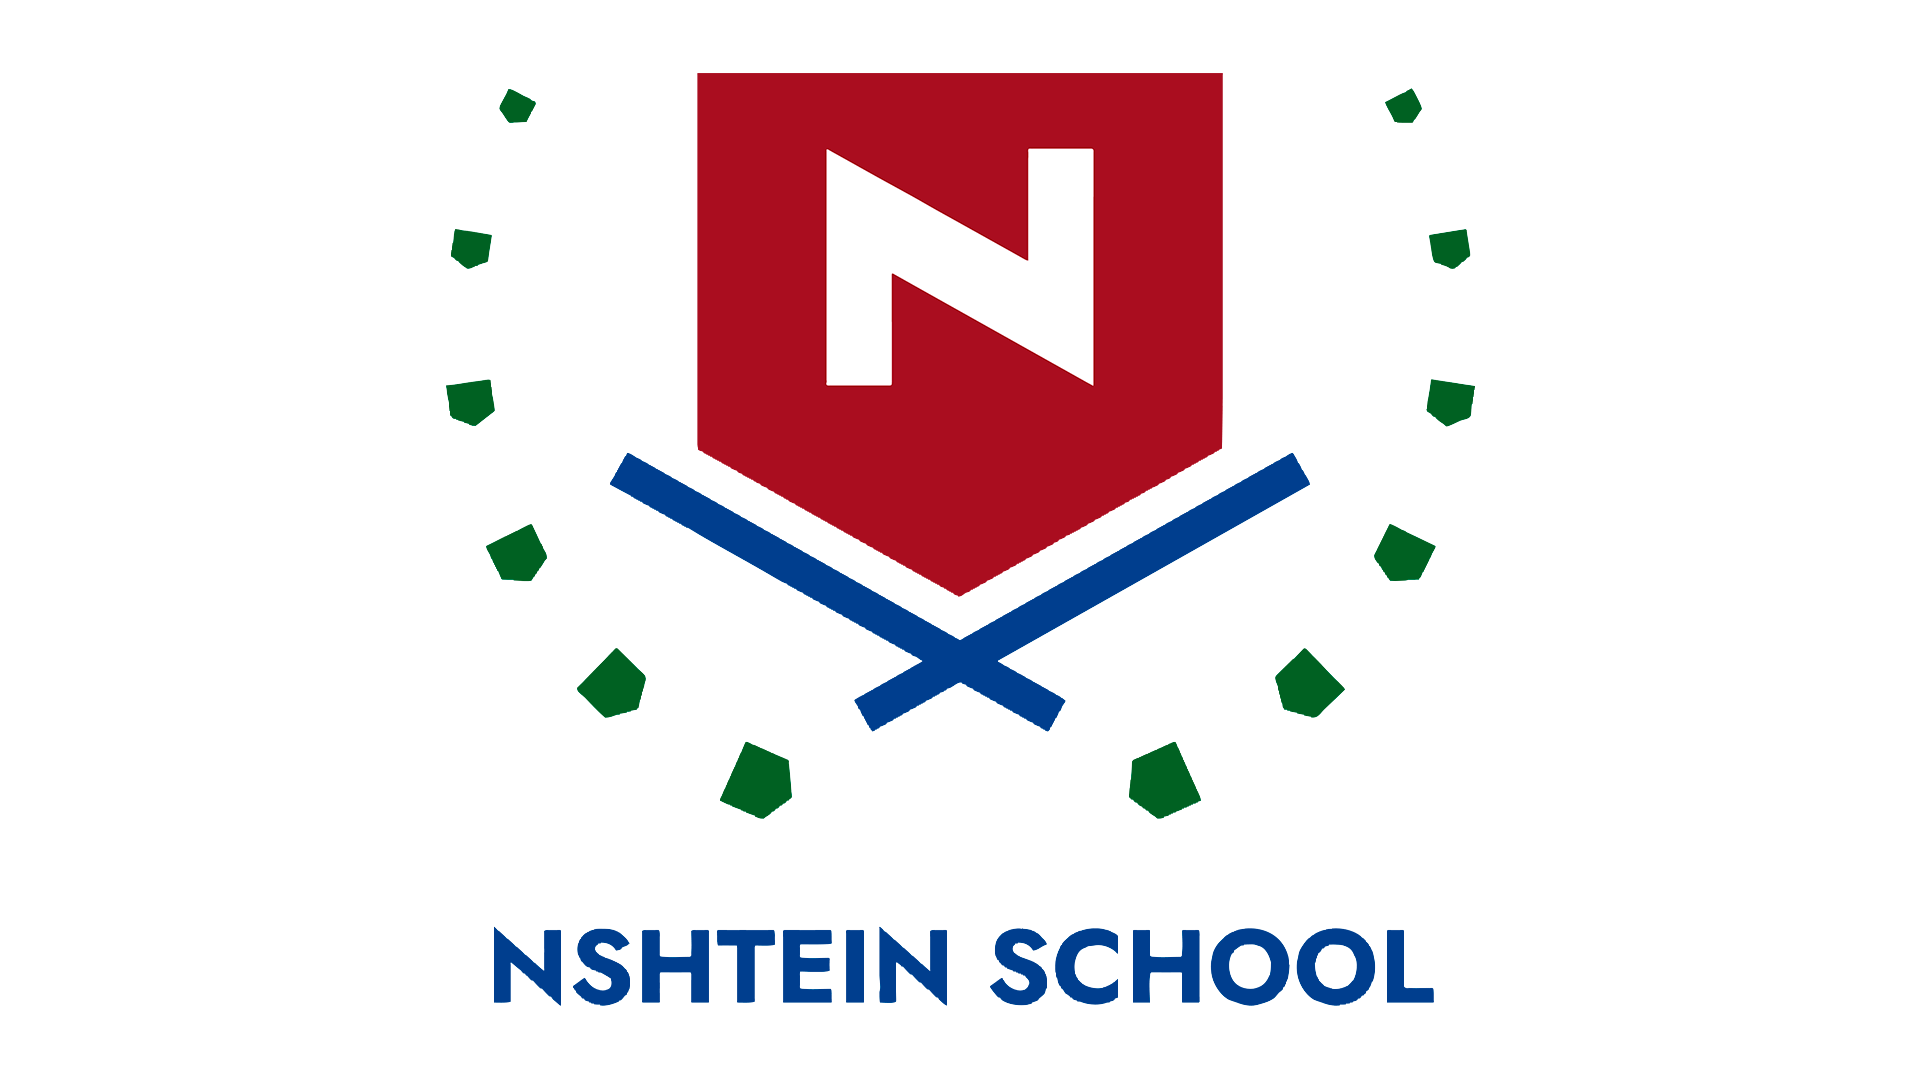 Nshtein School